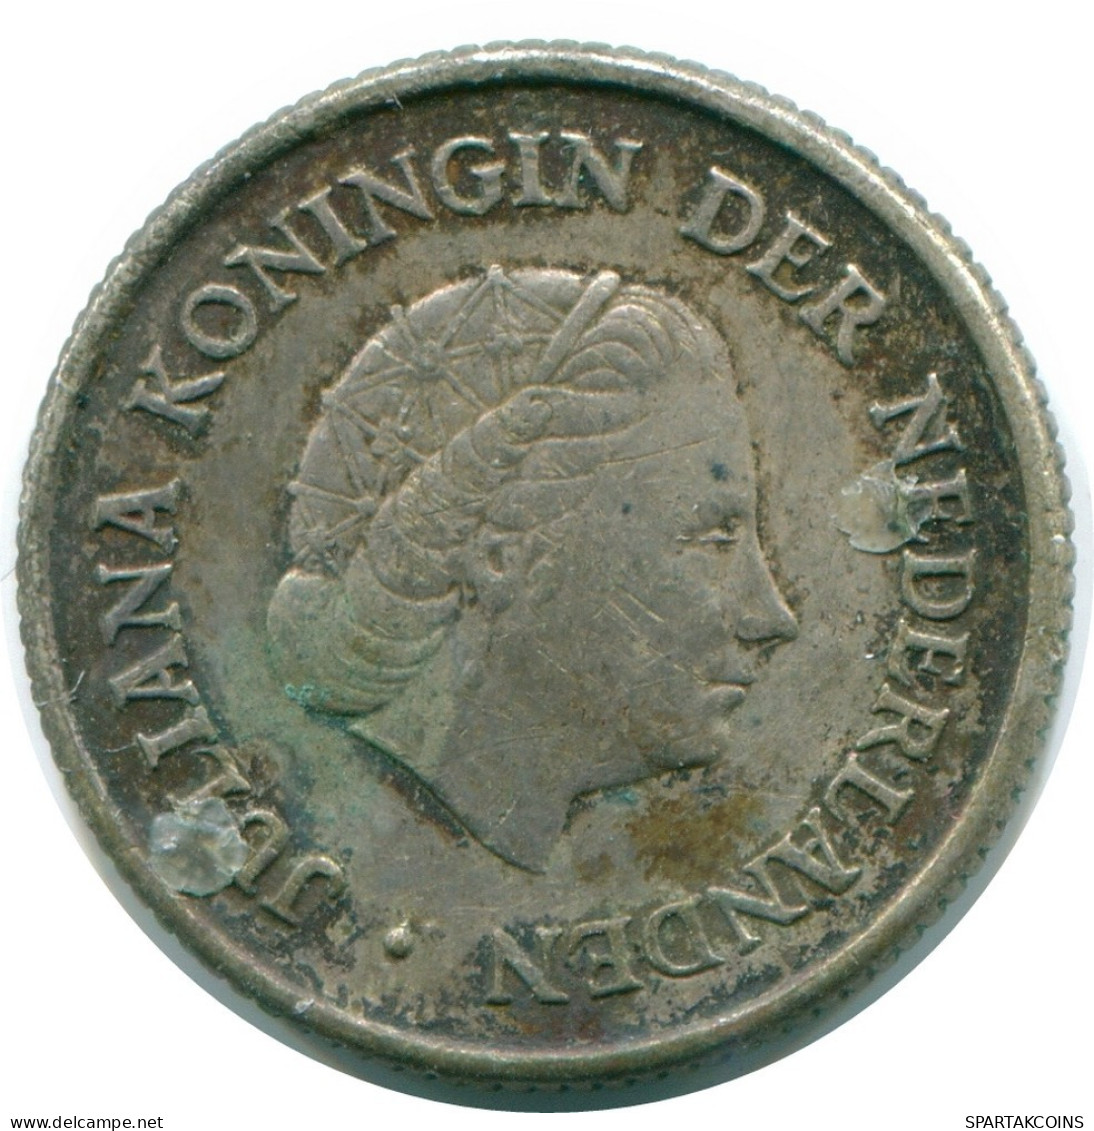 1/4 GULDEN 1967 NETHERLANDS ANTILLES SILVER Colonial Coin #NL11589.4.U.A - Antilles Néerlandaises